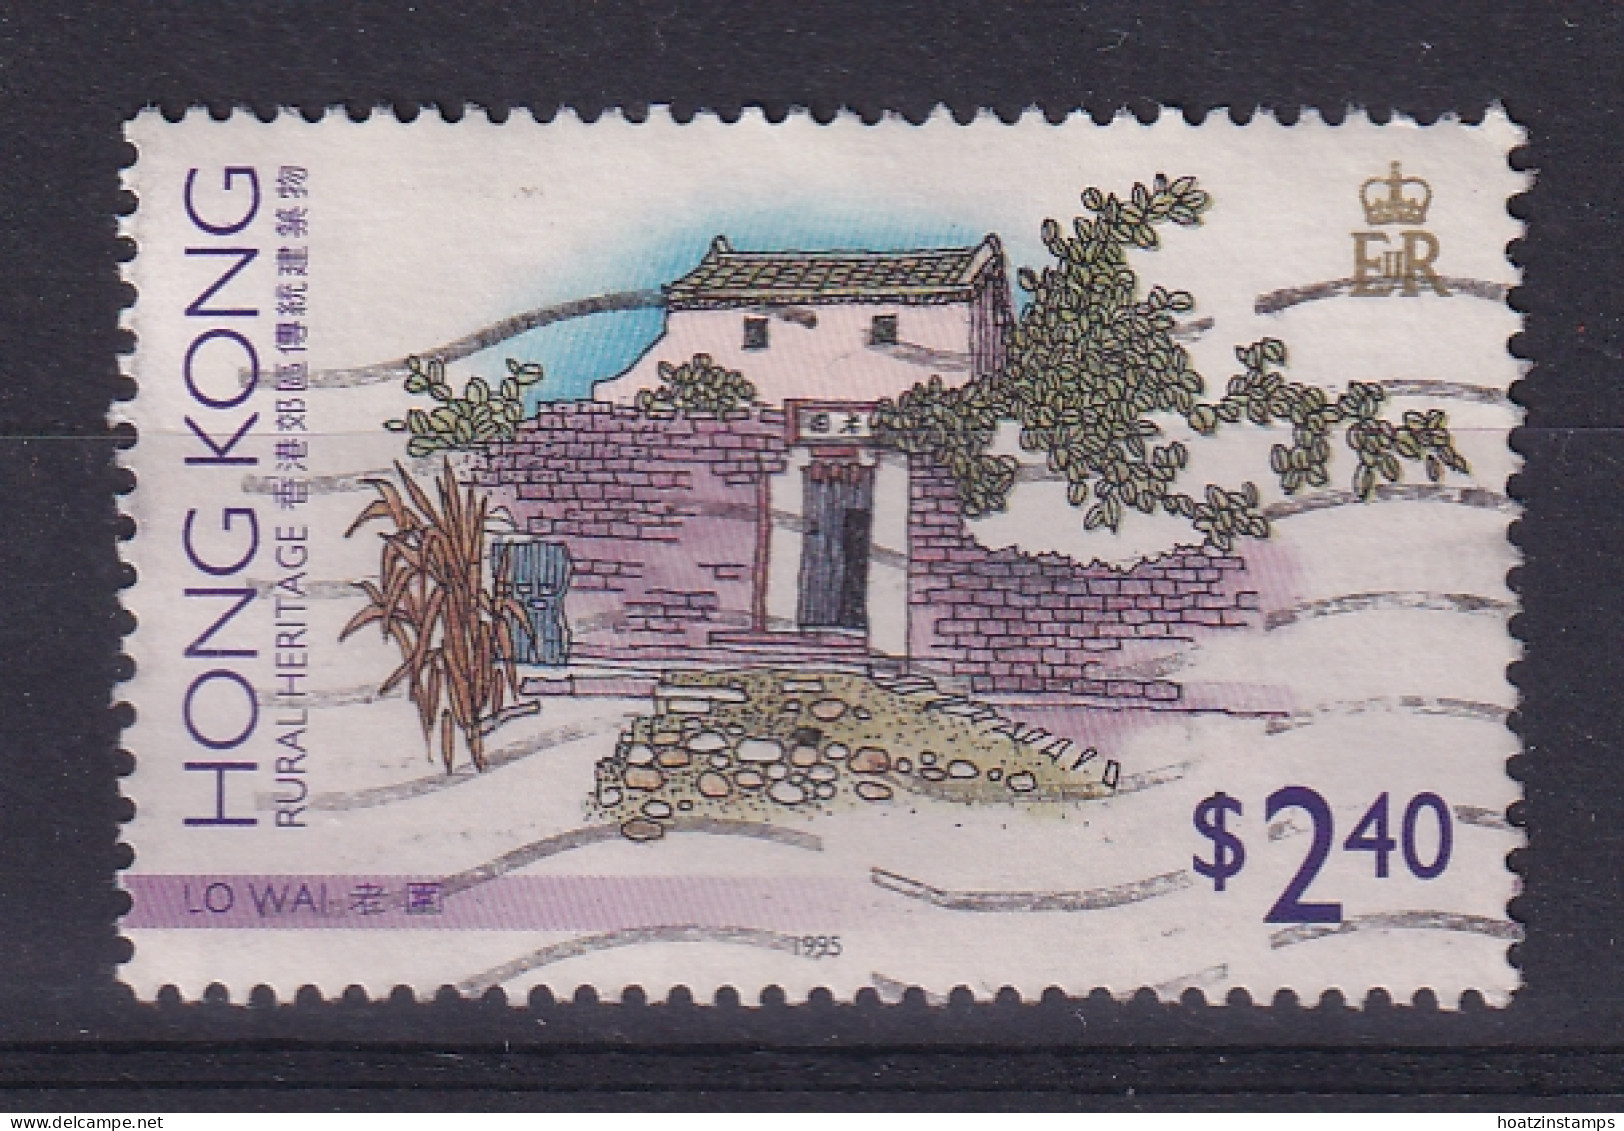 Hong Kong: 1995   Hong Kong Traditional Rural Buildings   SG804   $2.40    Used  - Used Stamps